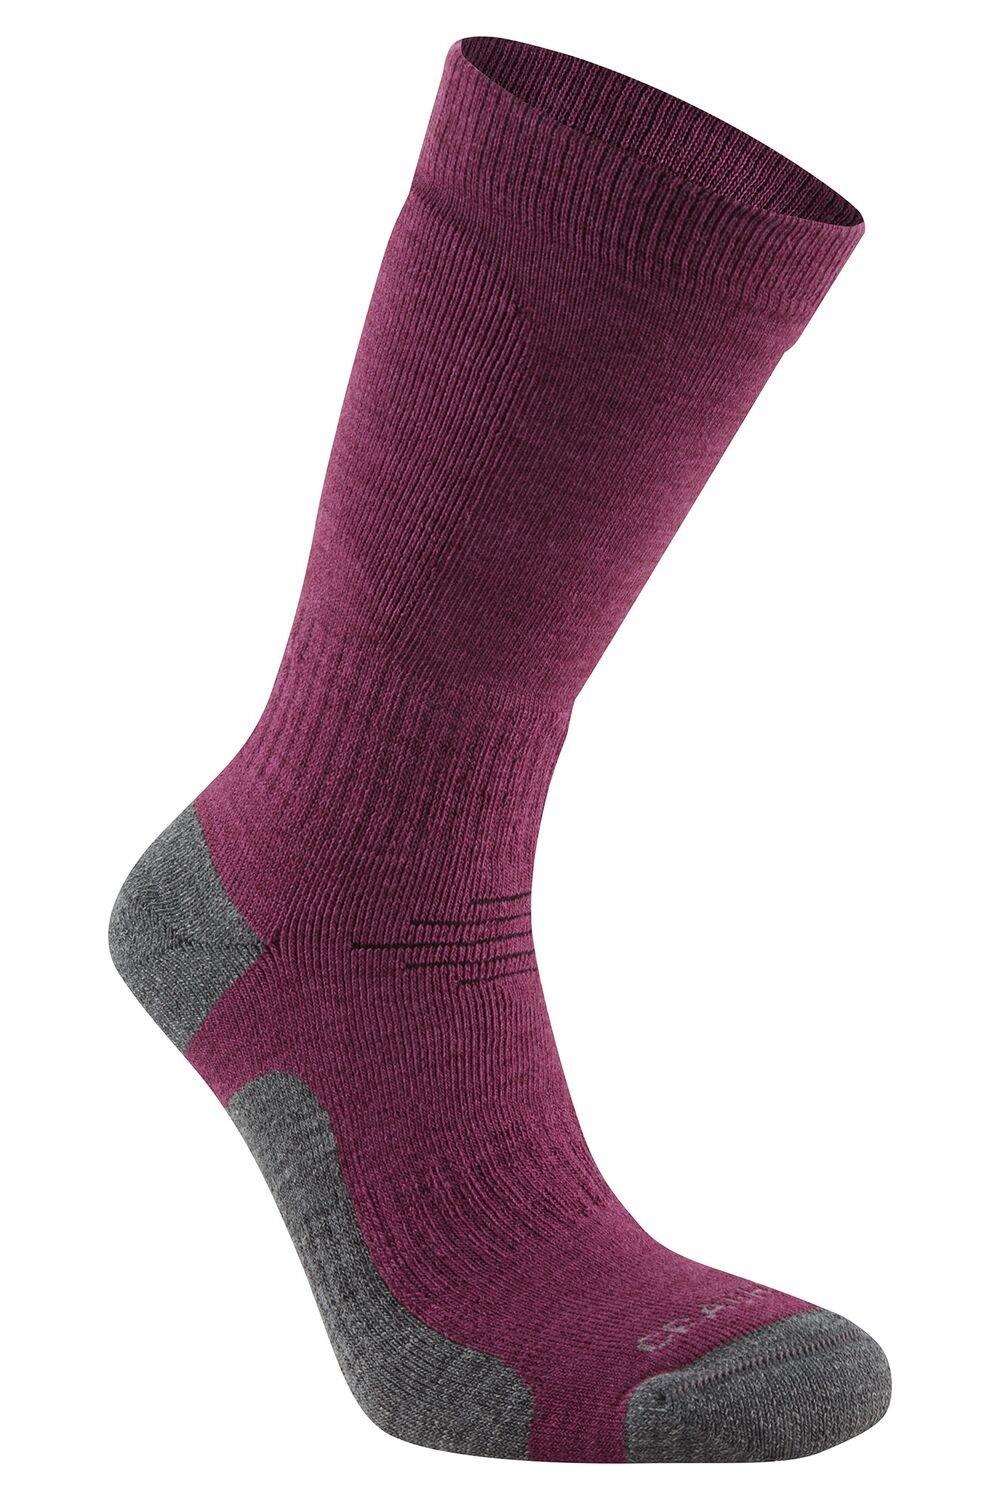 'Trek' Merino Wool-Blend Hiking Socks